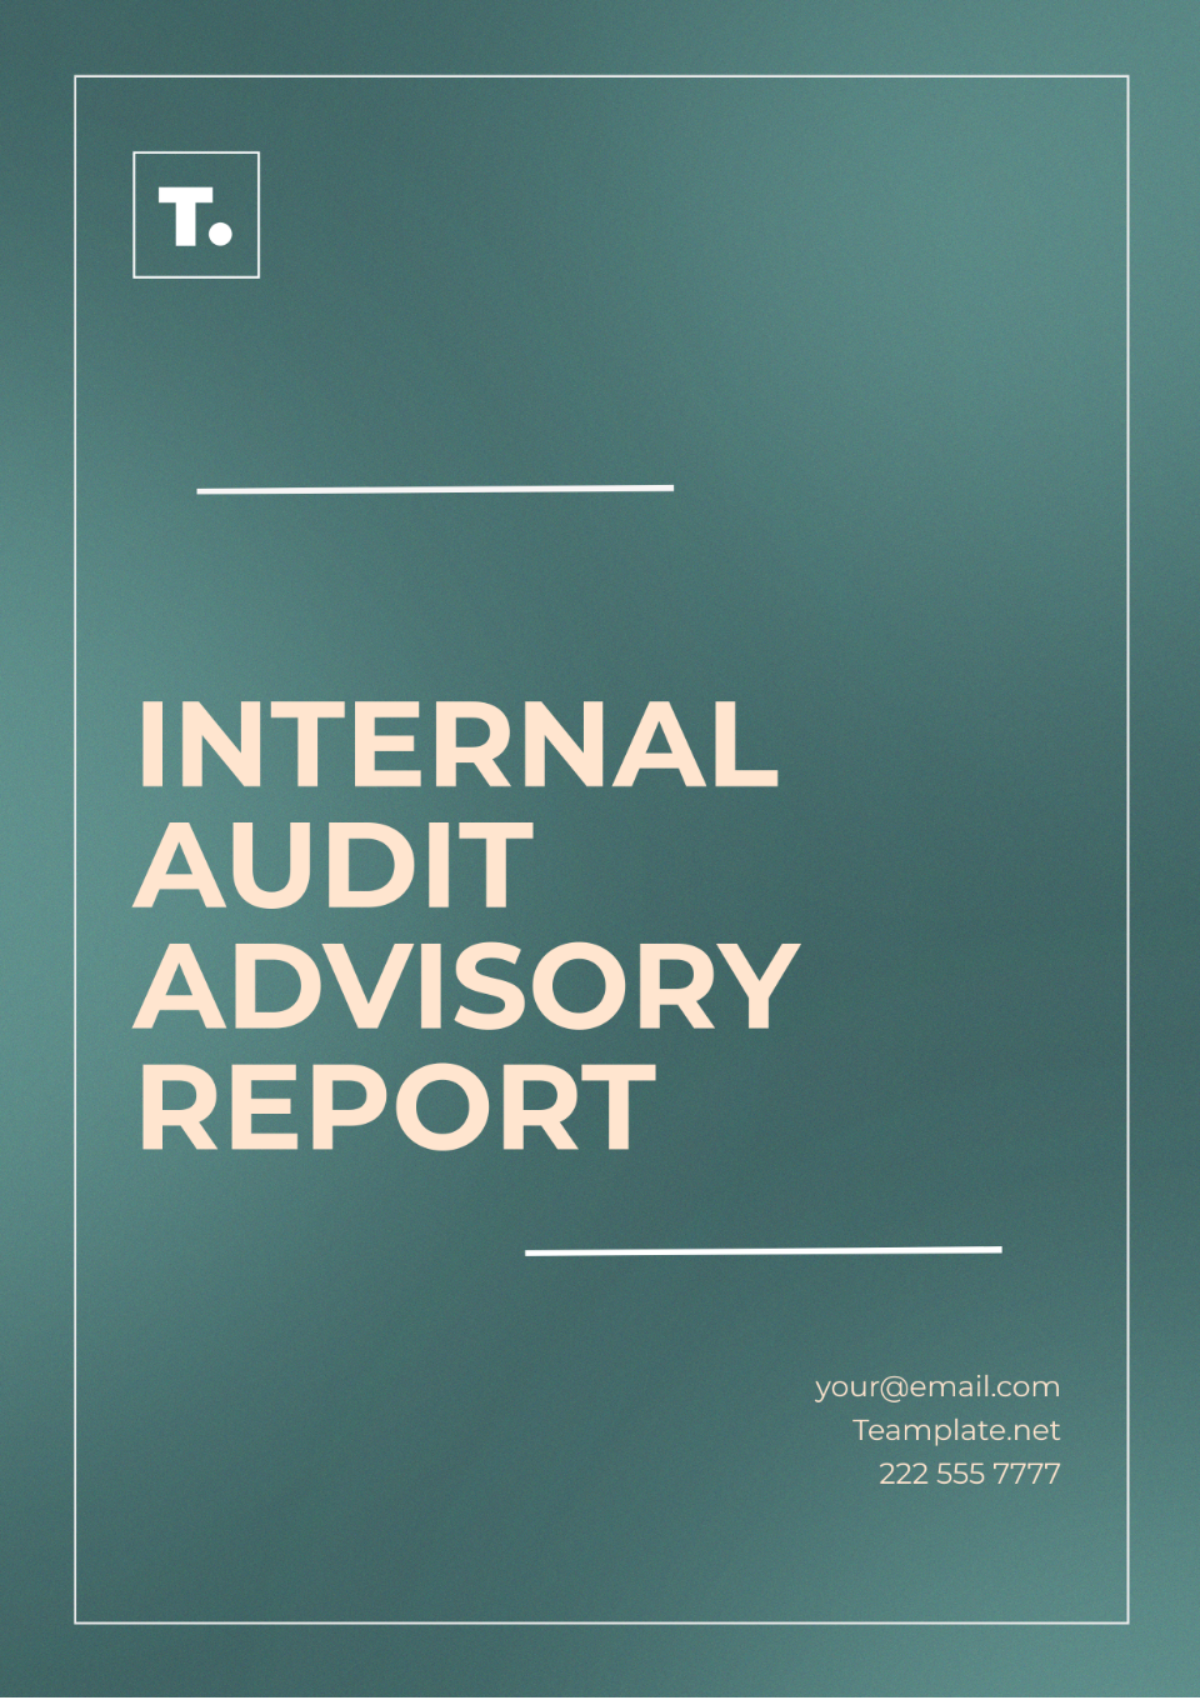 Internal Audit Advisory Report Template